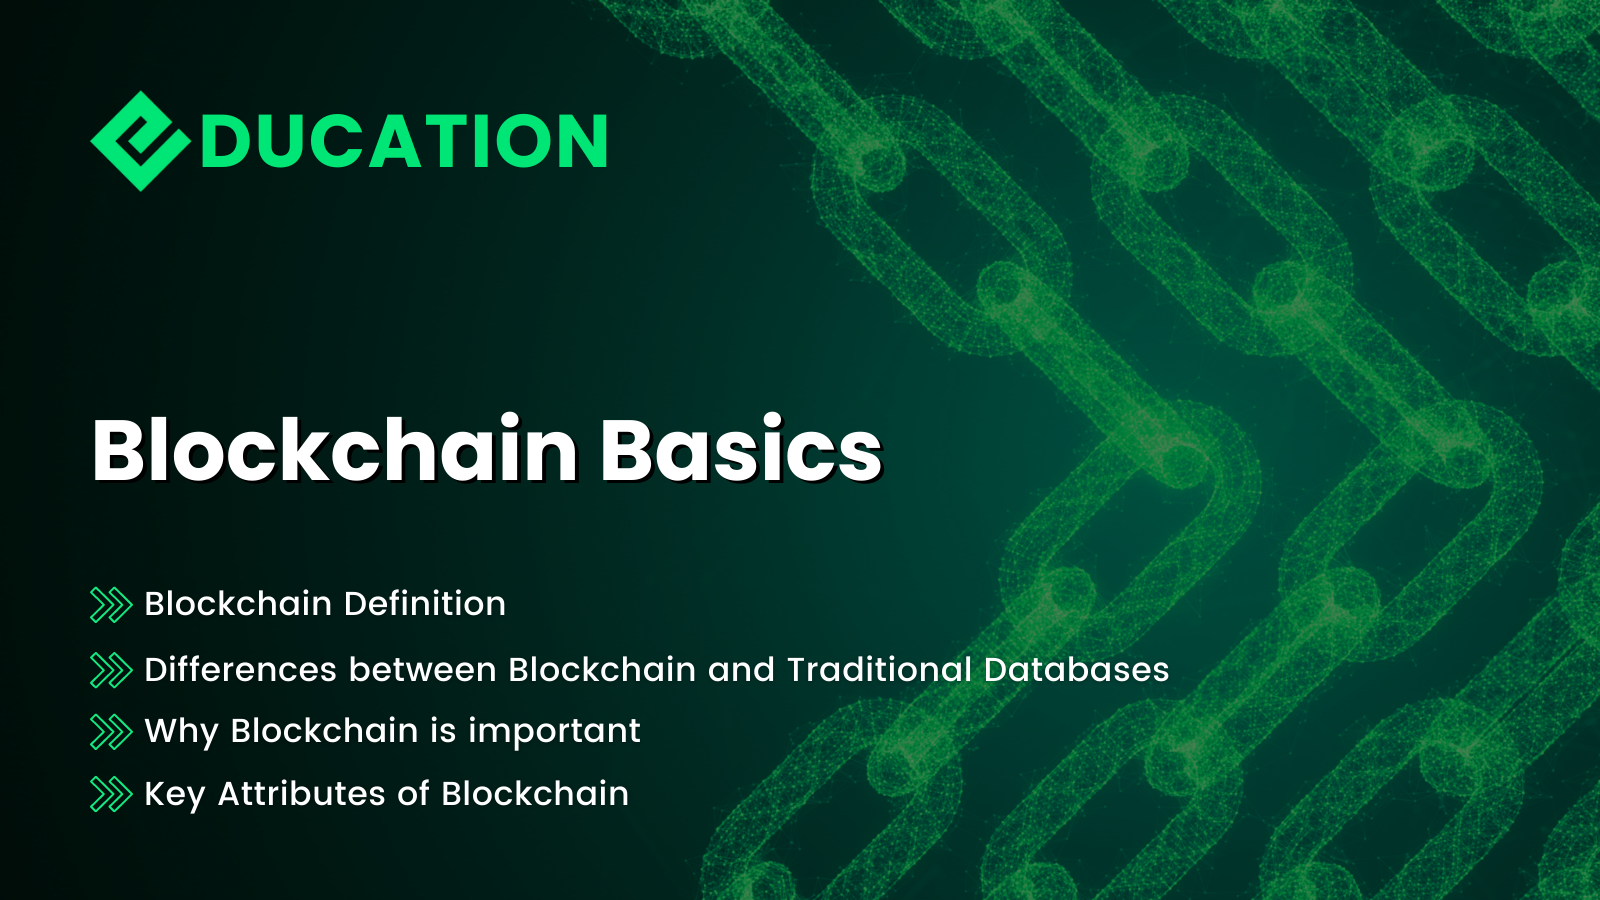 Cover image presenting blockchain basic attributes